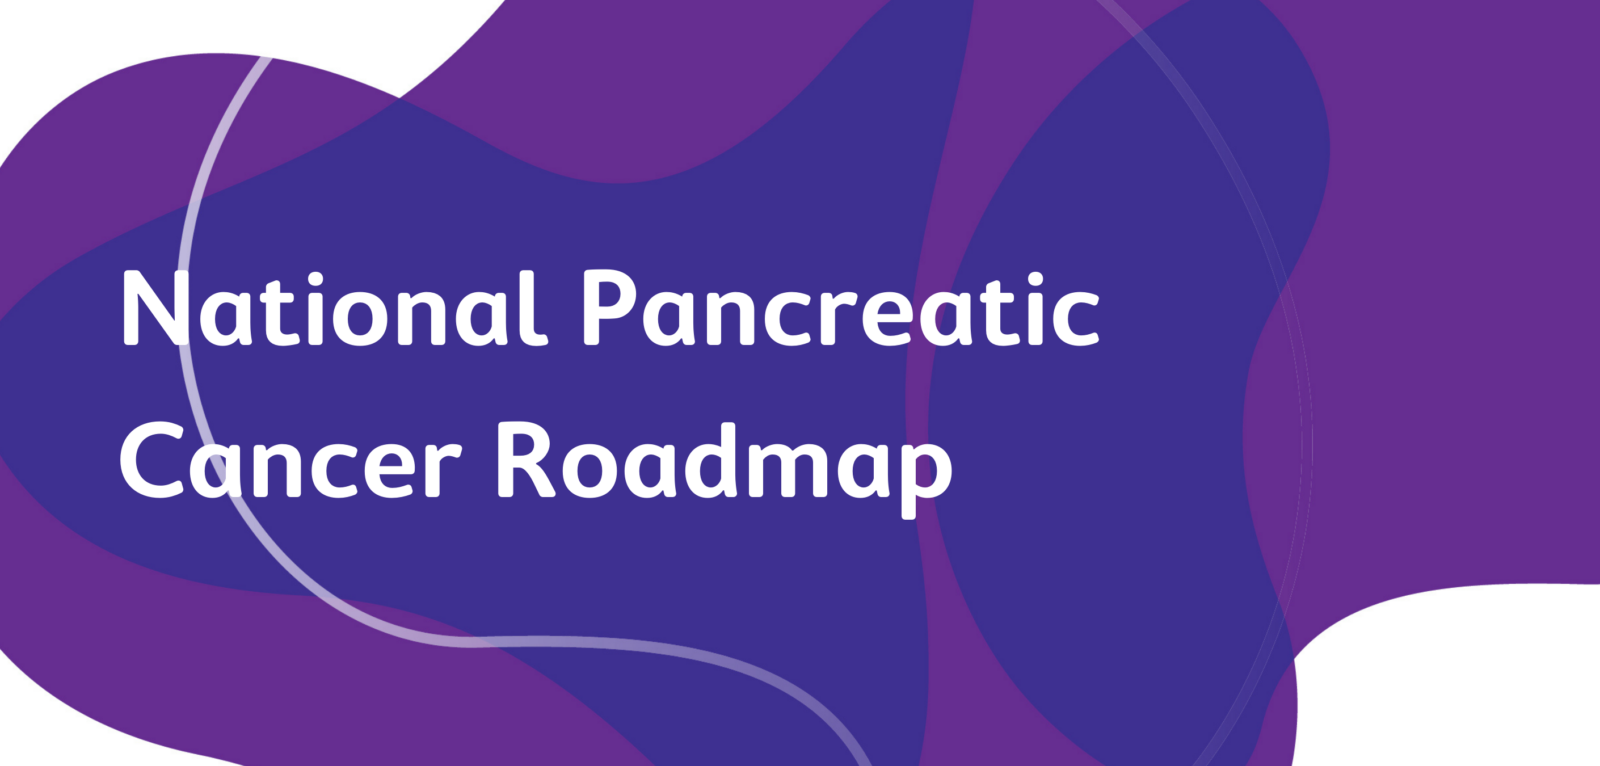 National pancreatic cancer roadmap